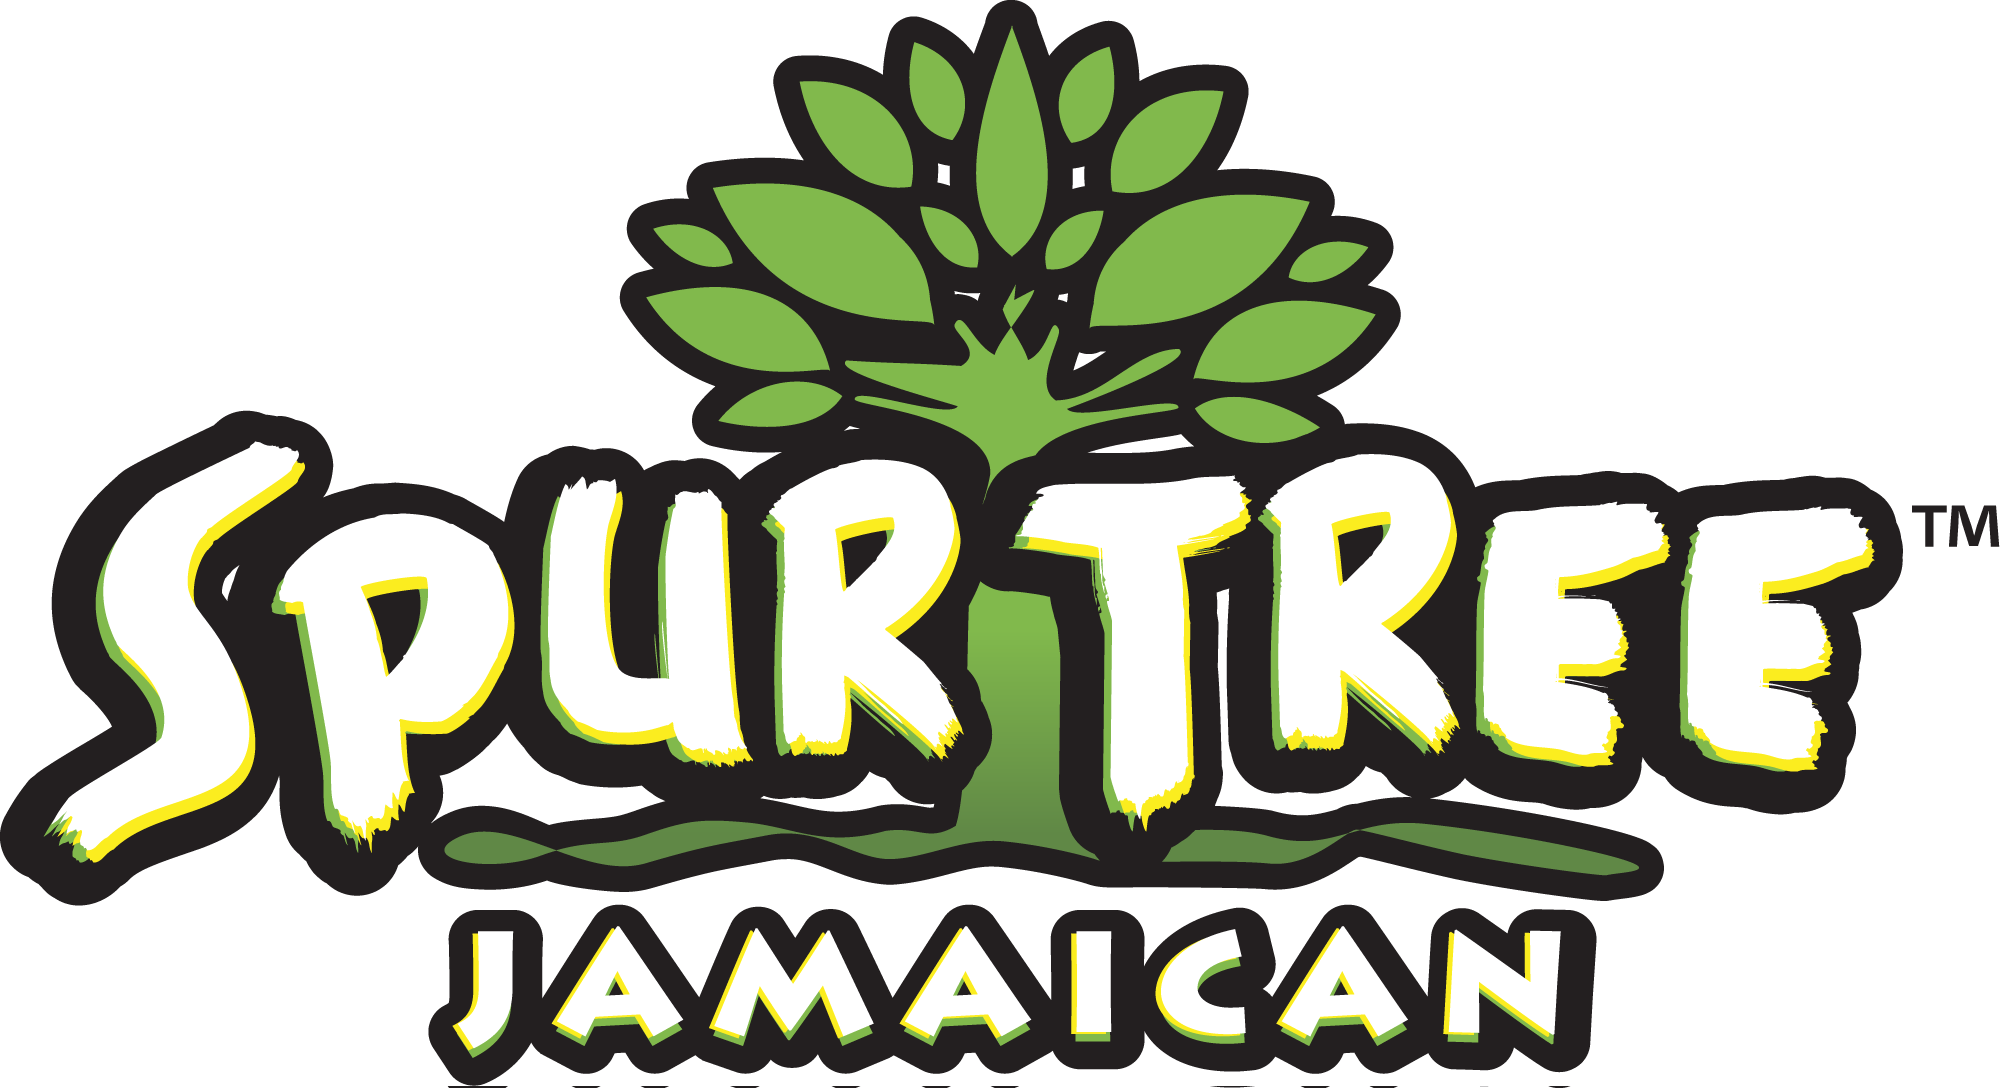 Spur Tree Spices Jamaica